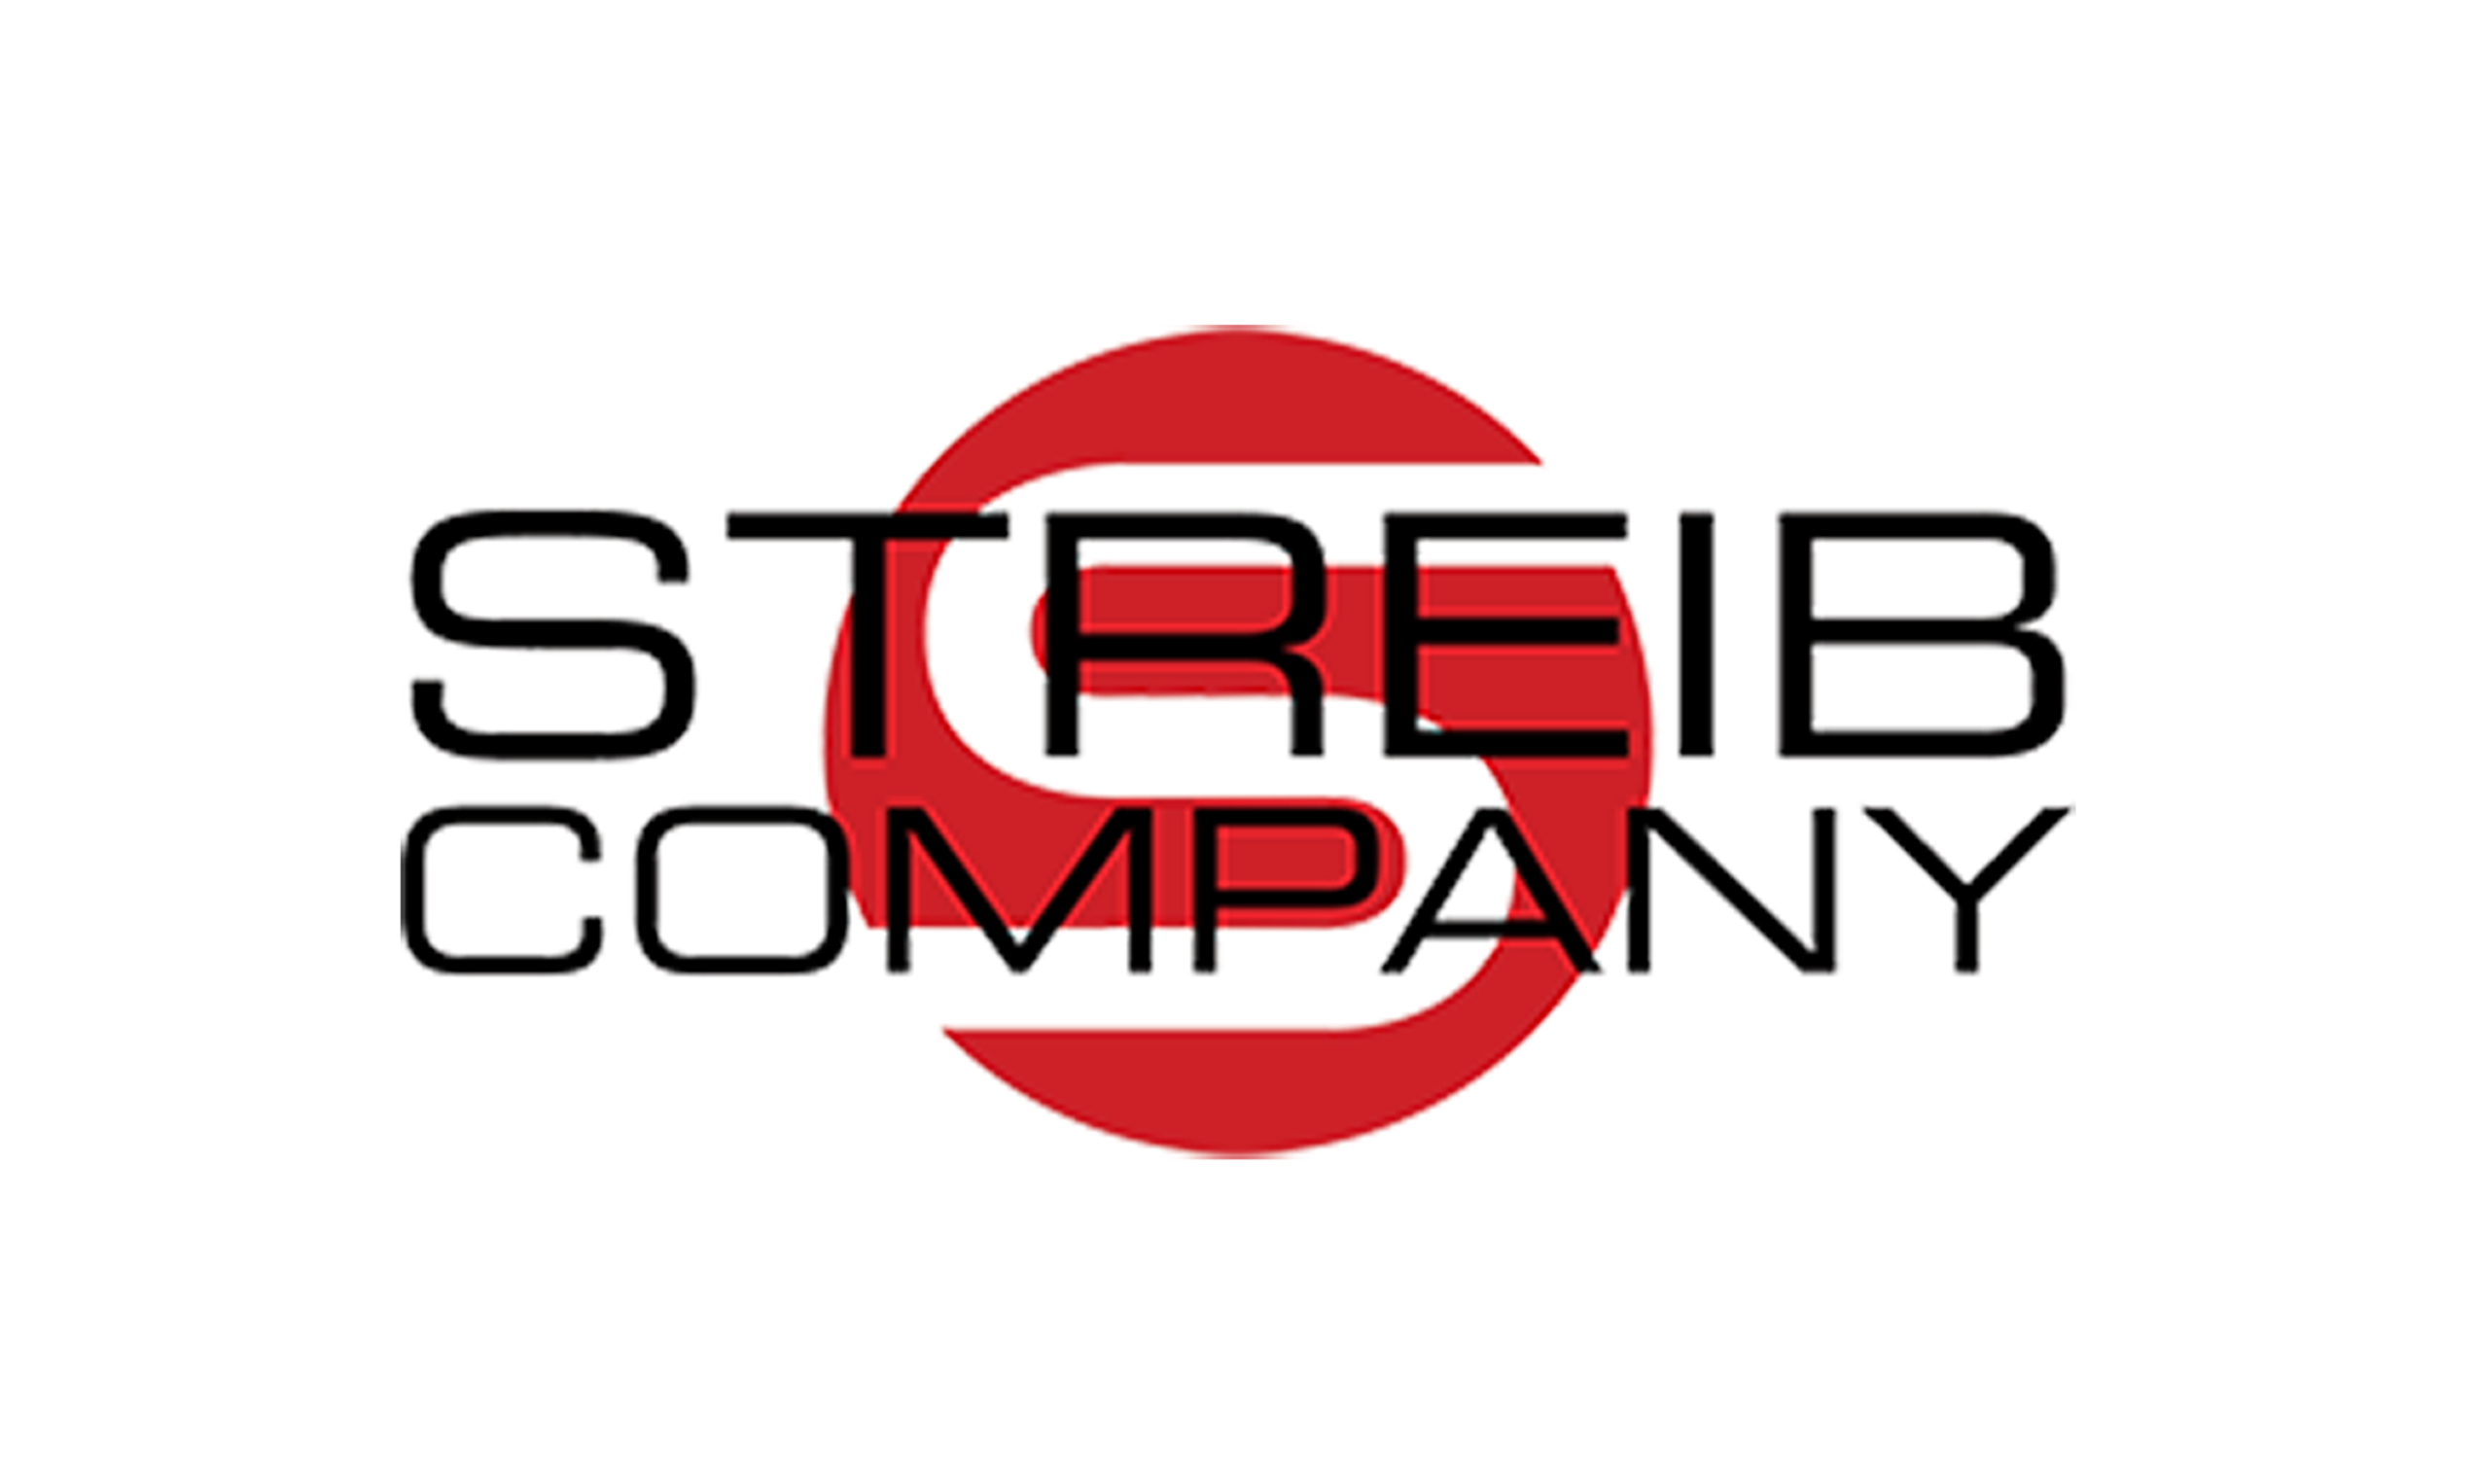 Streib Company logo